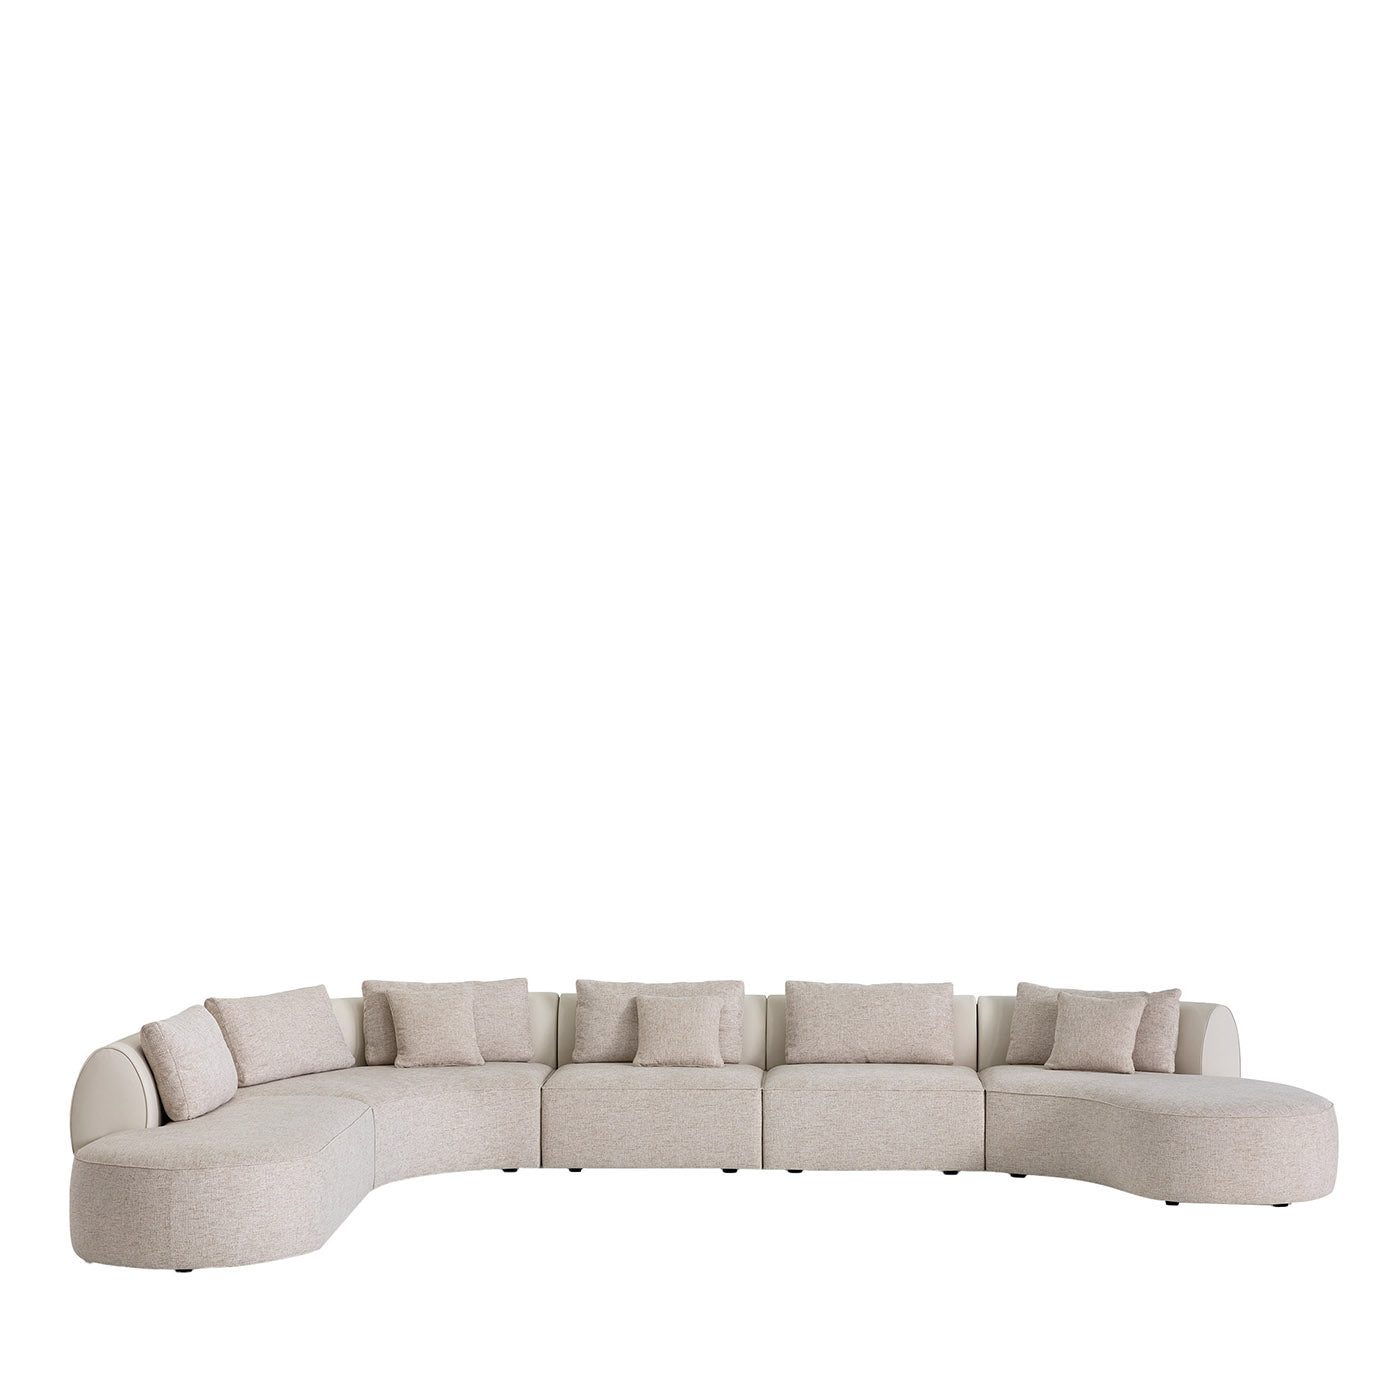 Botero Dark White Modular Sofa - Main view